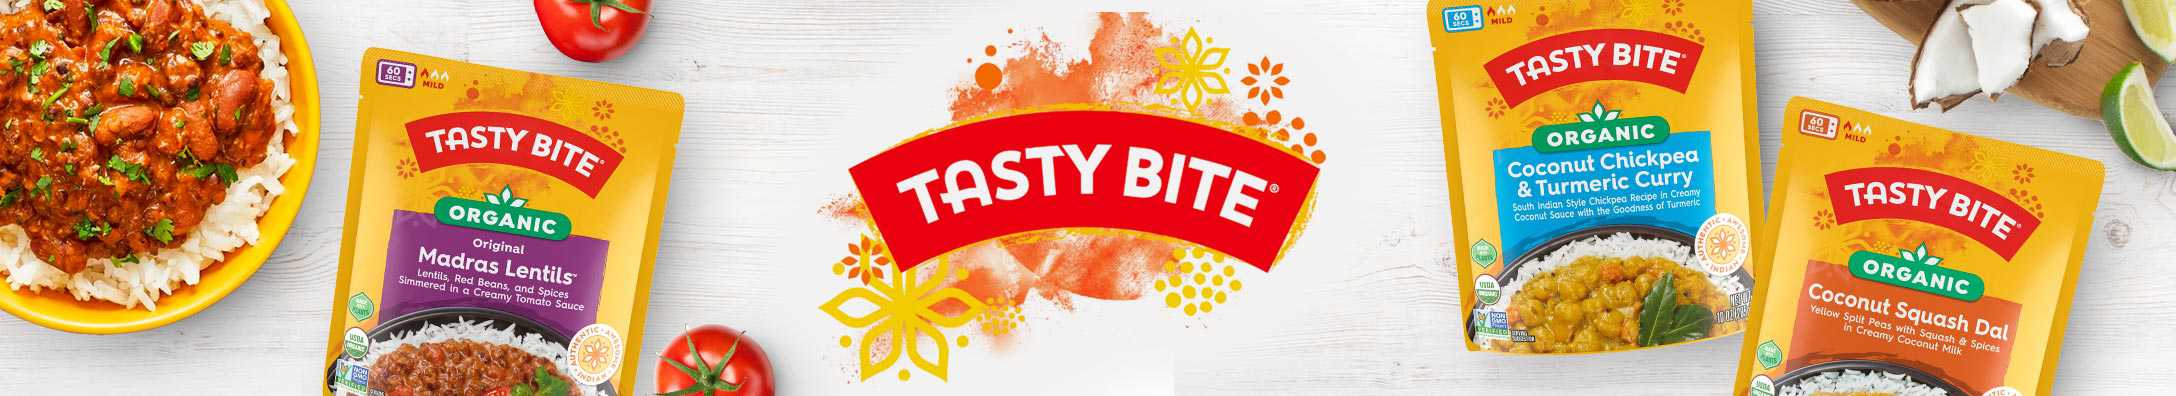 Tasty Bite products next to logo